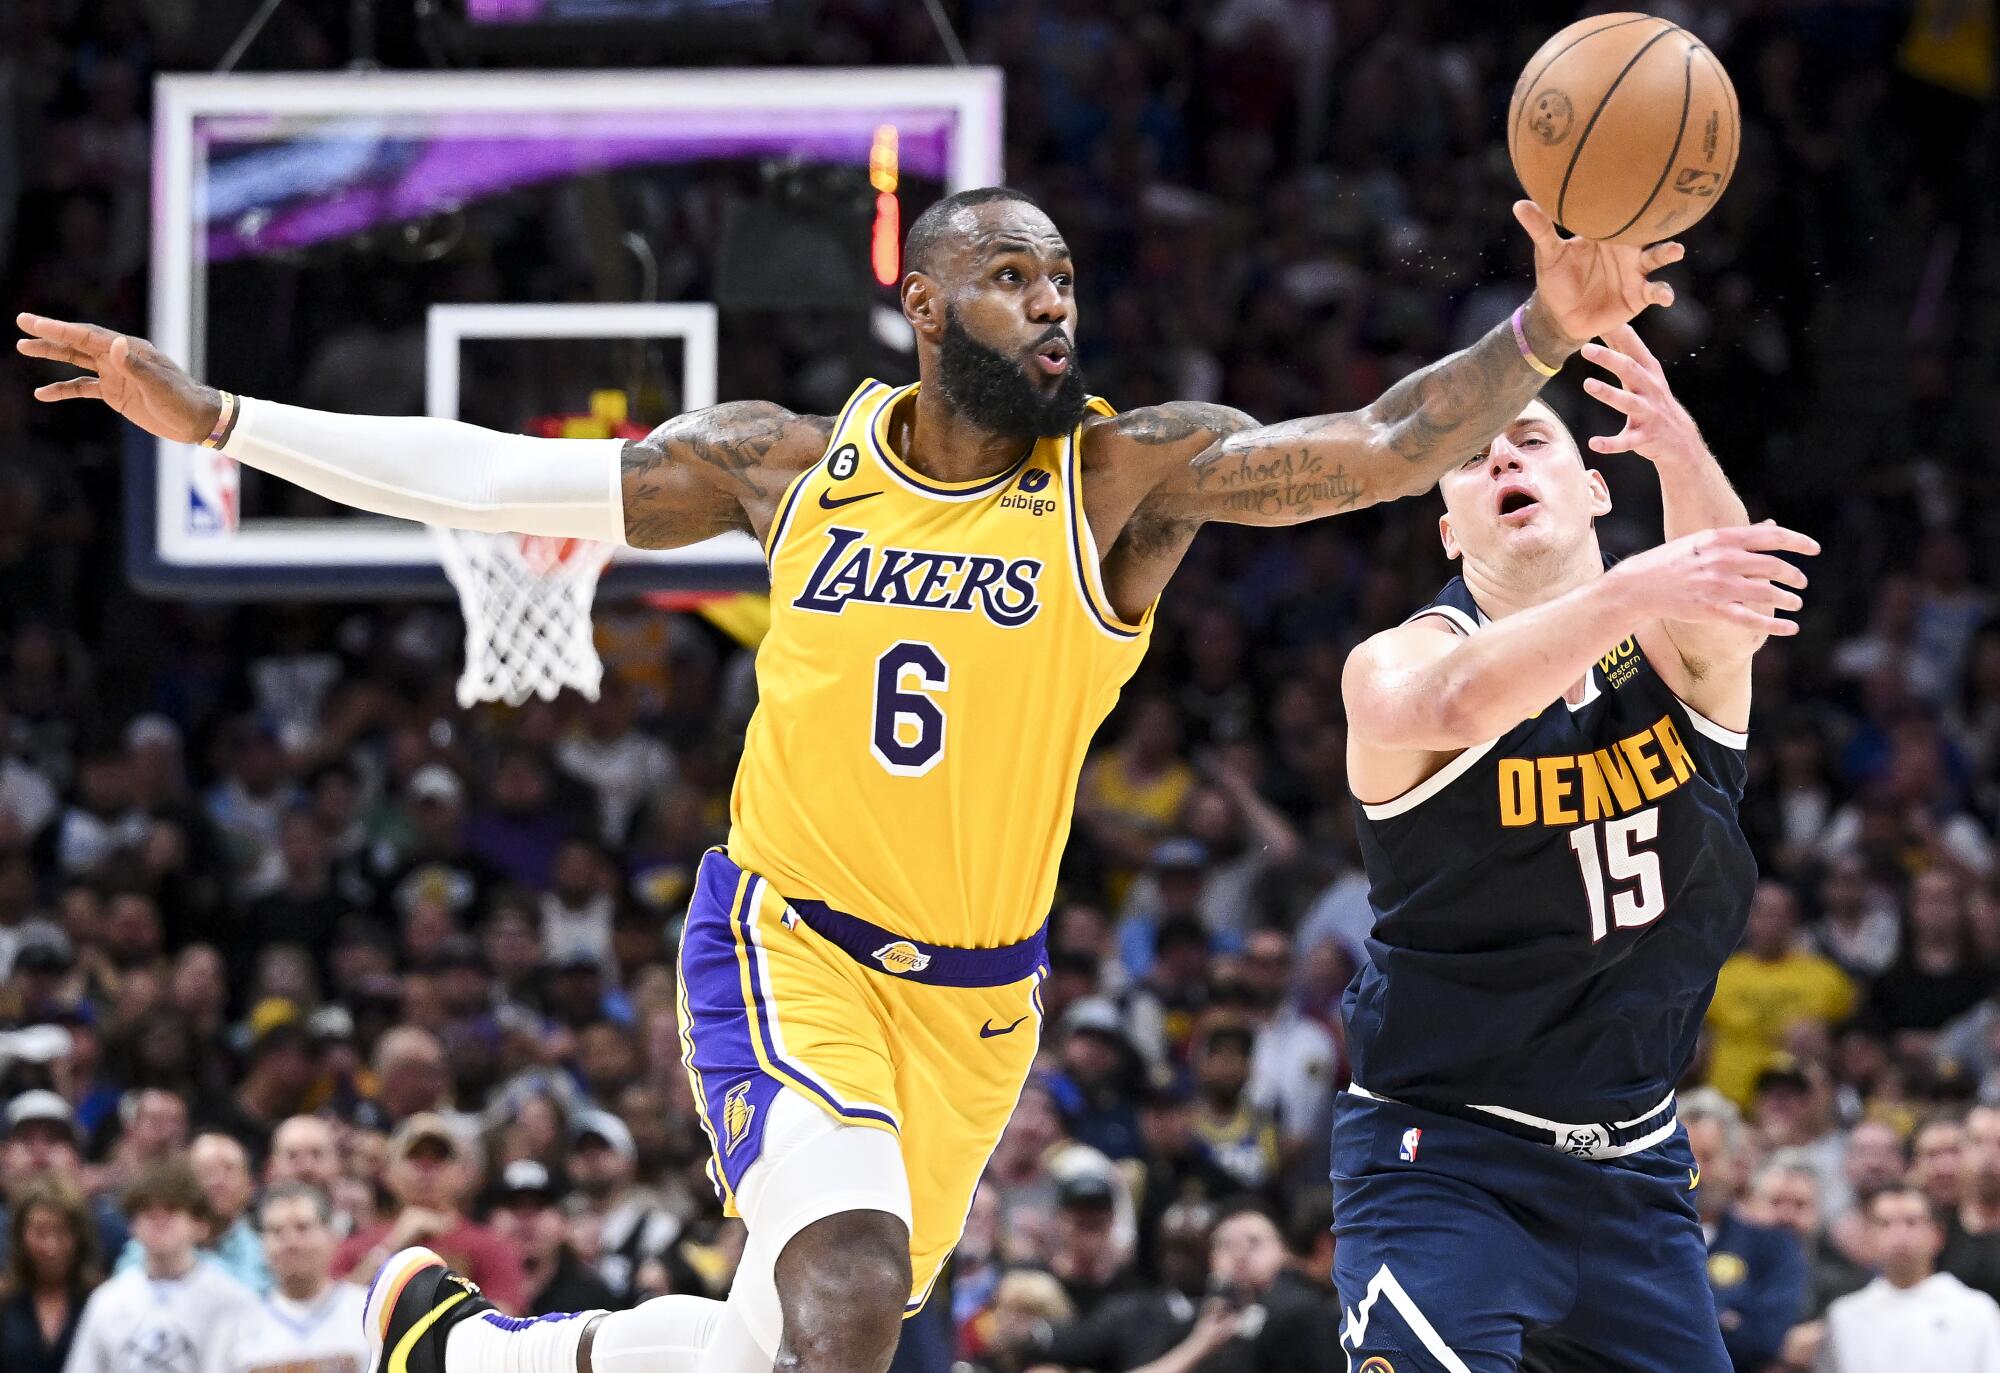 Lakers forward LeBron James steals a pass intended for Denver Nuggets center Nikola Jokic.